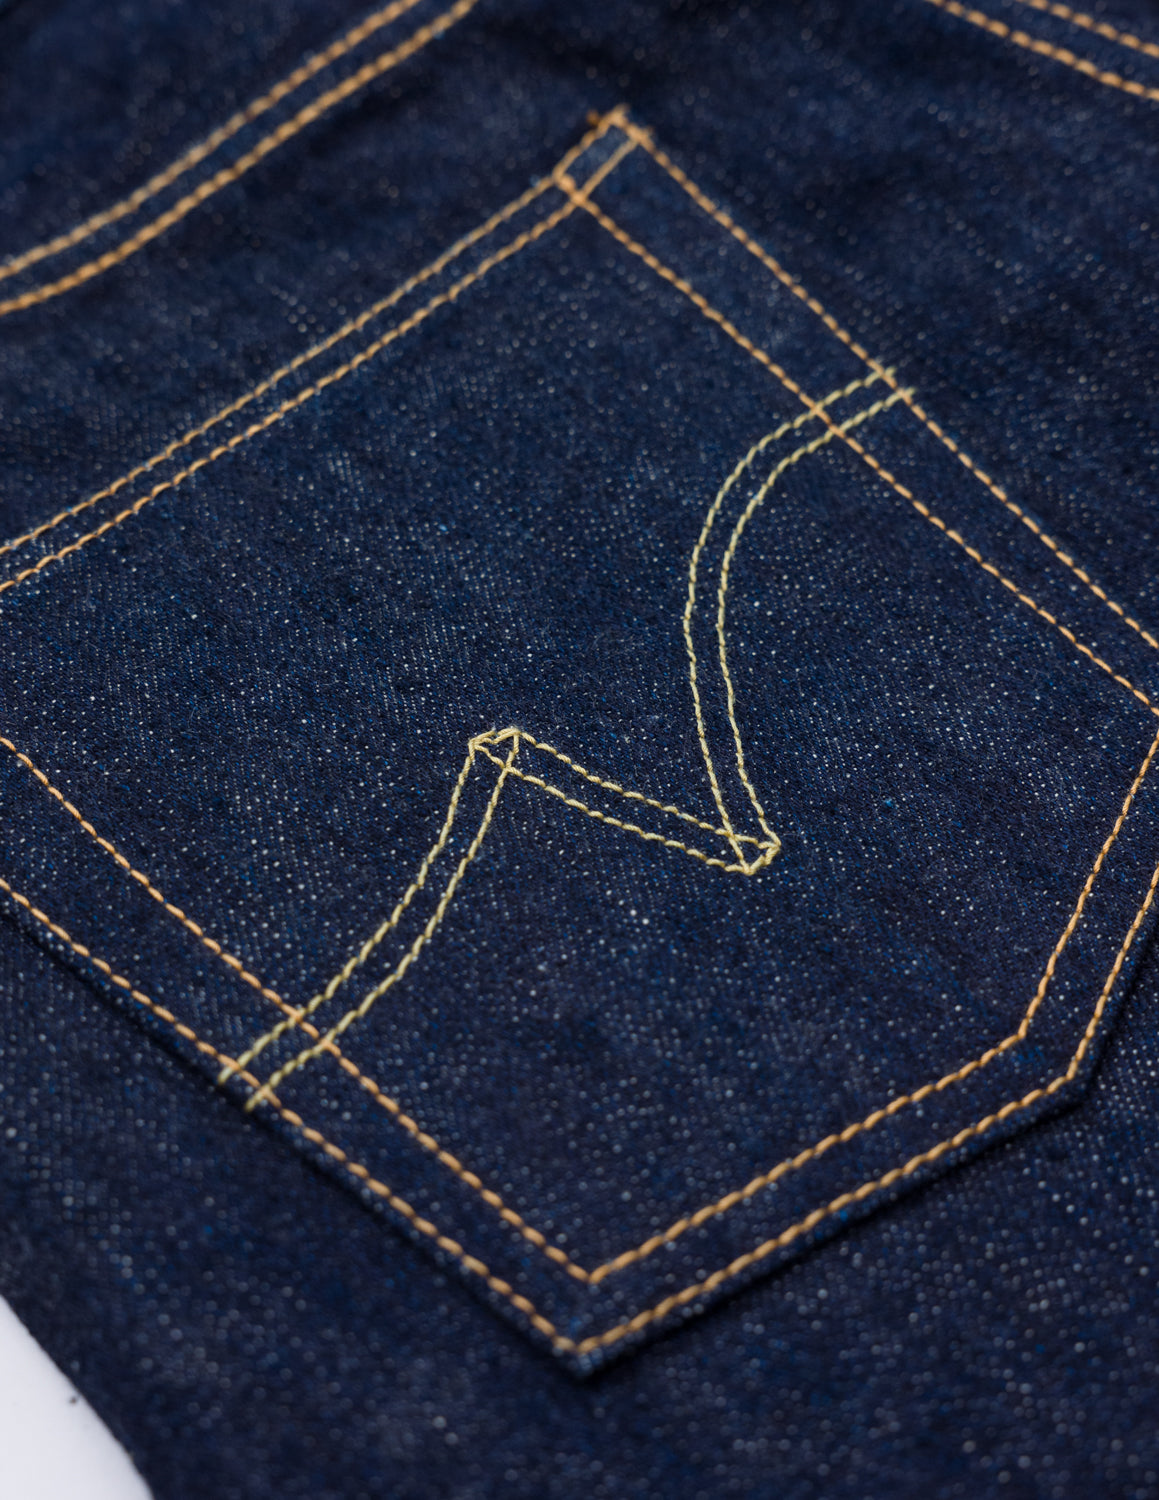 IH-555S-18 - 18oz Vintage Selvedge Denim Super Slim Cut Jeans - Indigo